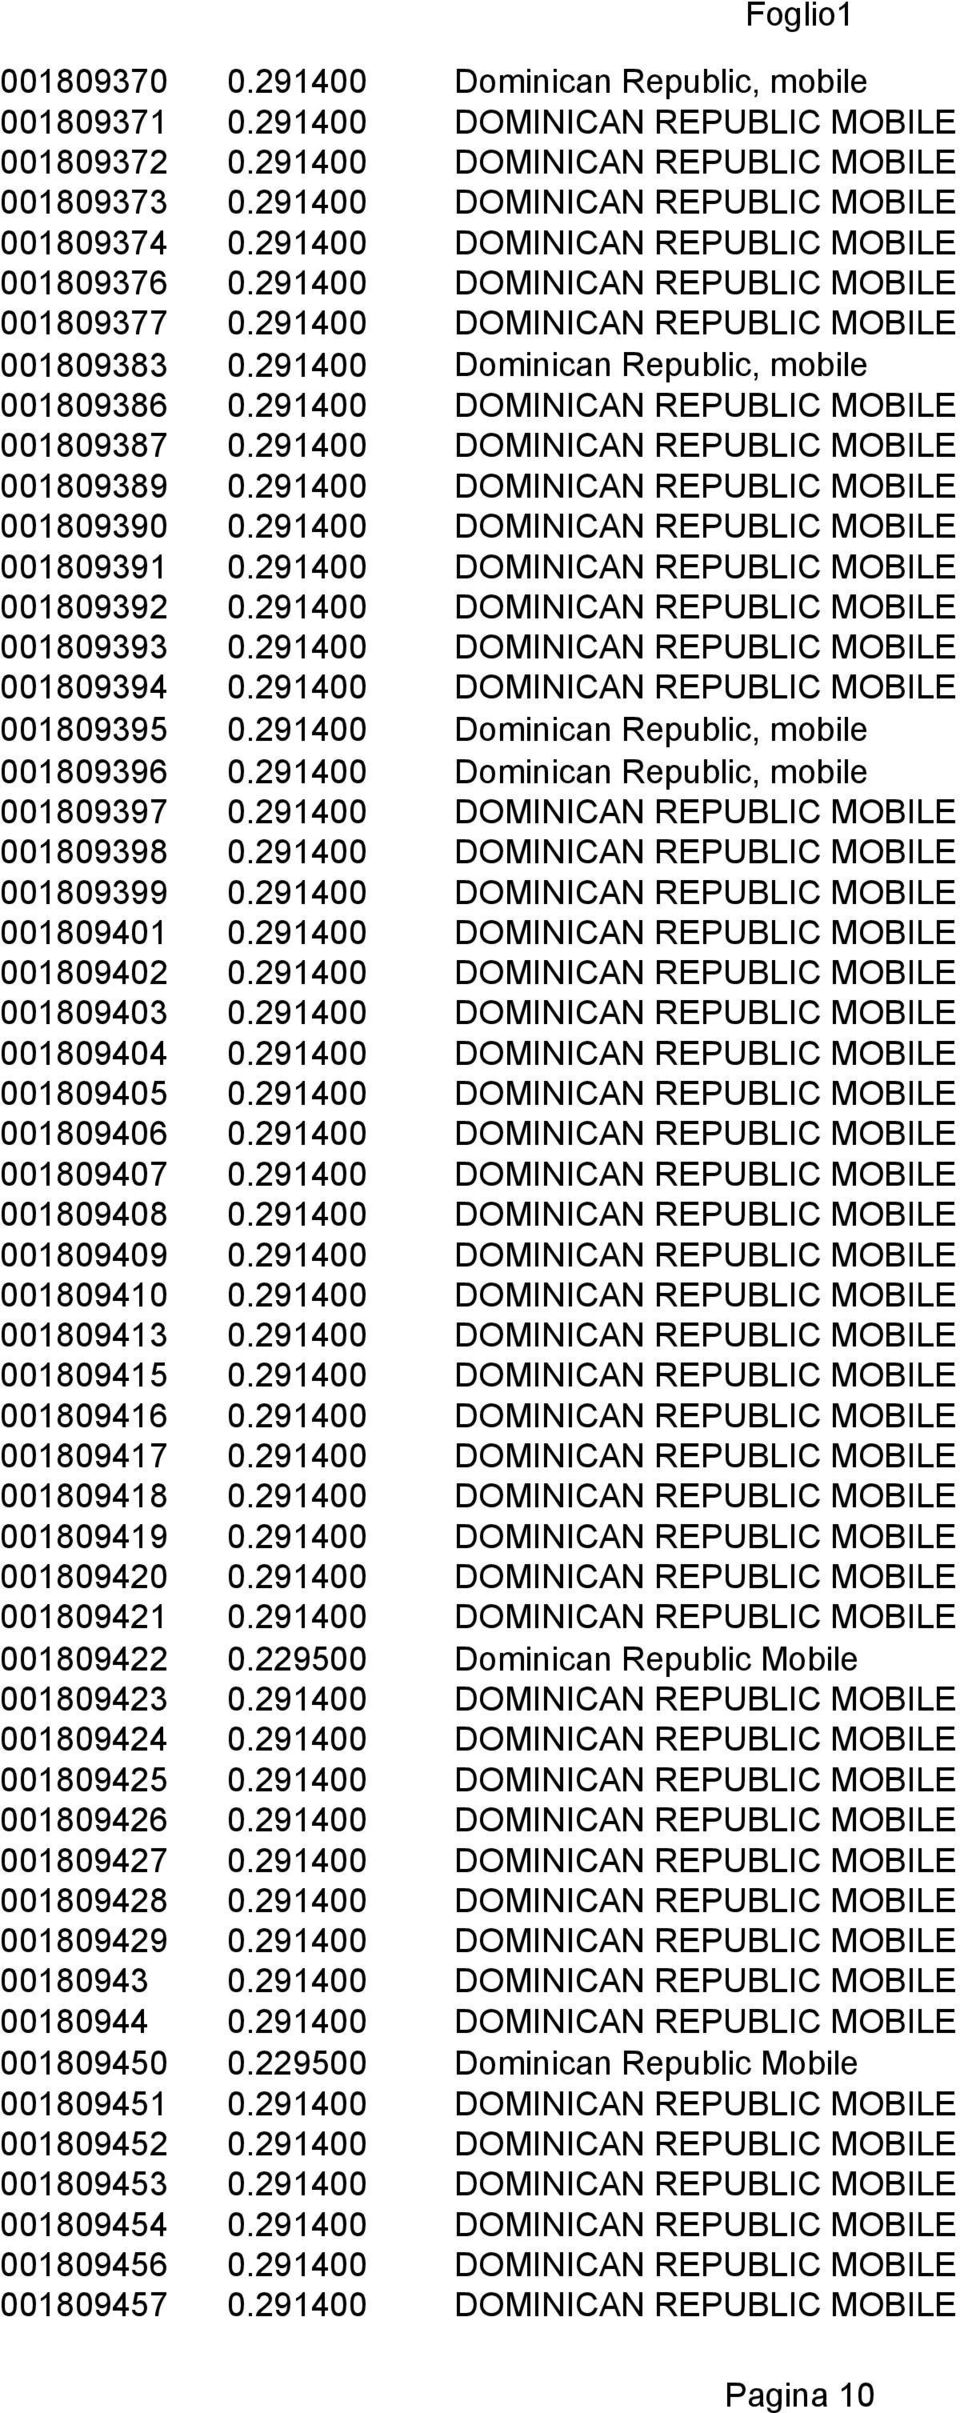 291400 DOMINICAN REPUBLIC MOBILE 001809387 0.291400 DOMINICAN REPUBLIC MOBILE 001809389 0.291400 DOMINICAN REPUBLIC MOBILE 001809390 0.291400 DOMINICAN REPUBLIC MOBILE 001809391 0.